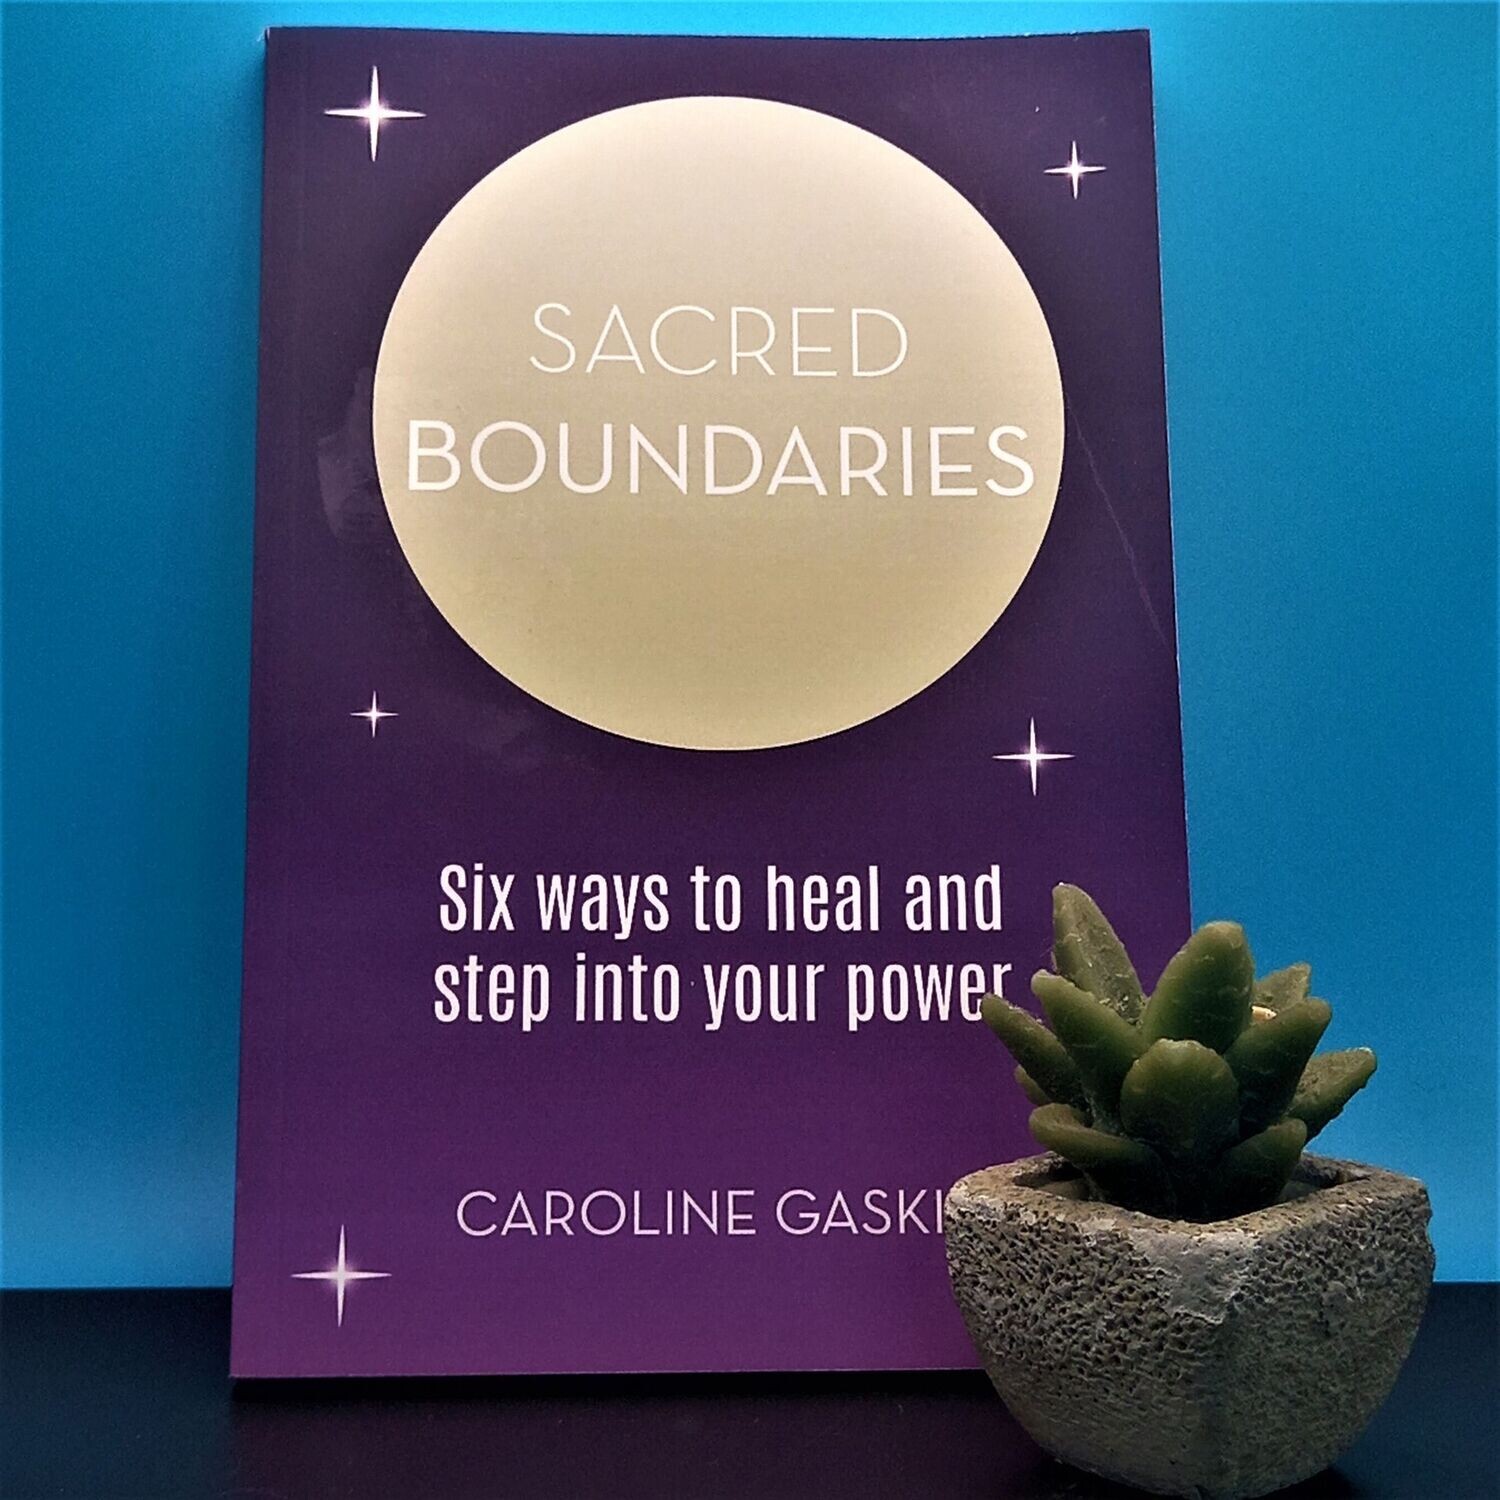 Sacred Boundaries by Caroline Gaskin